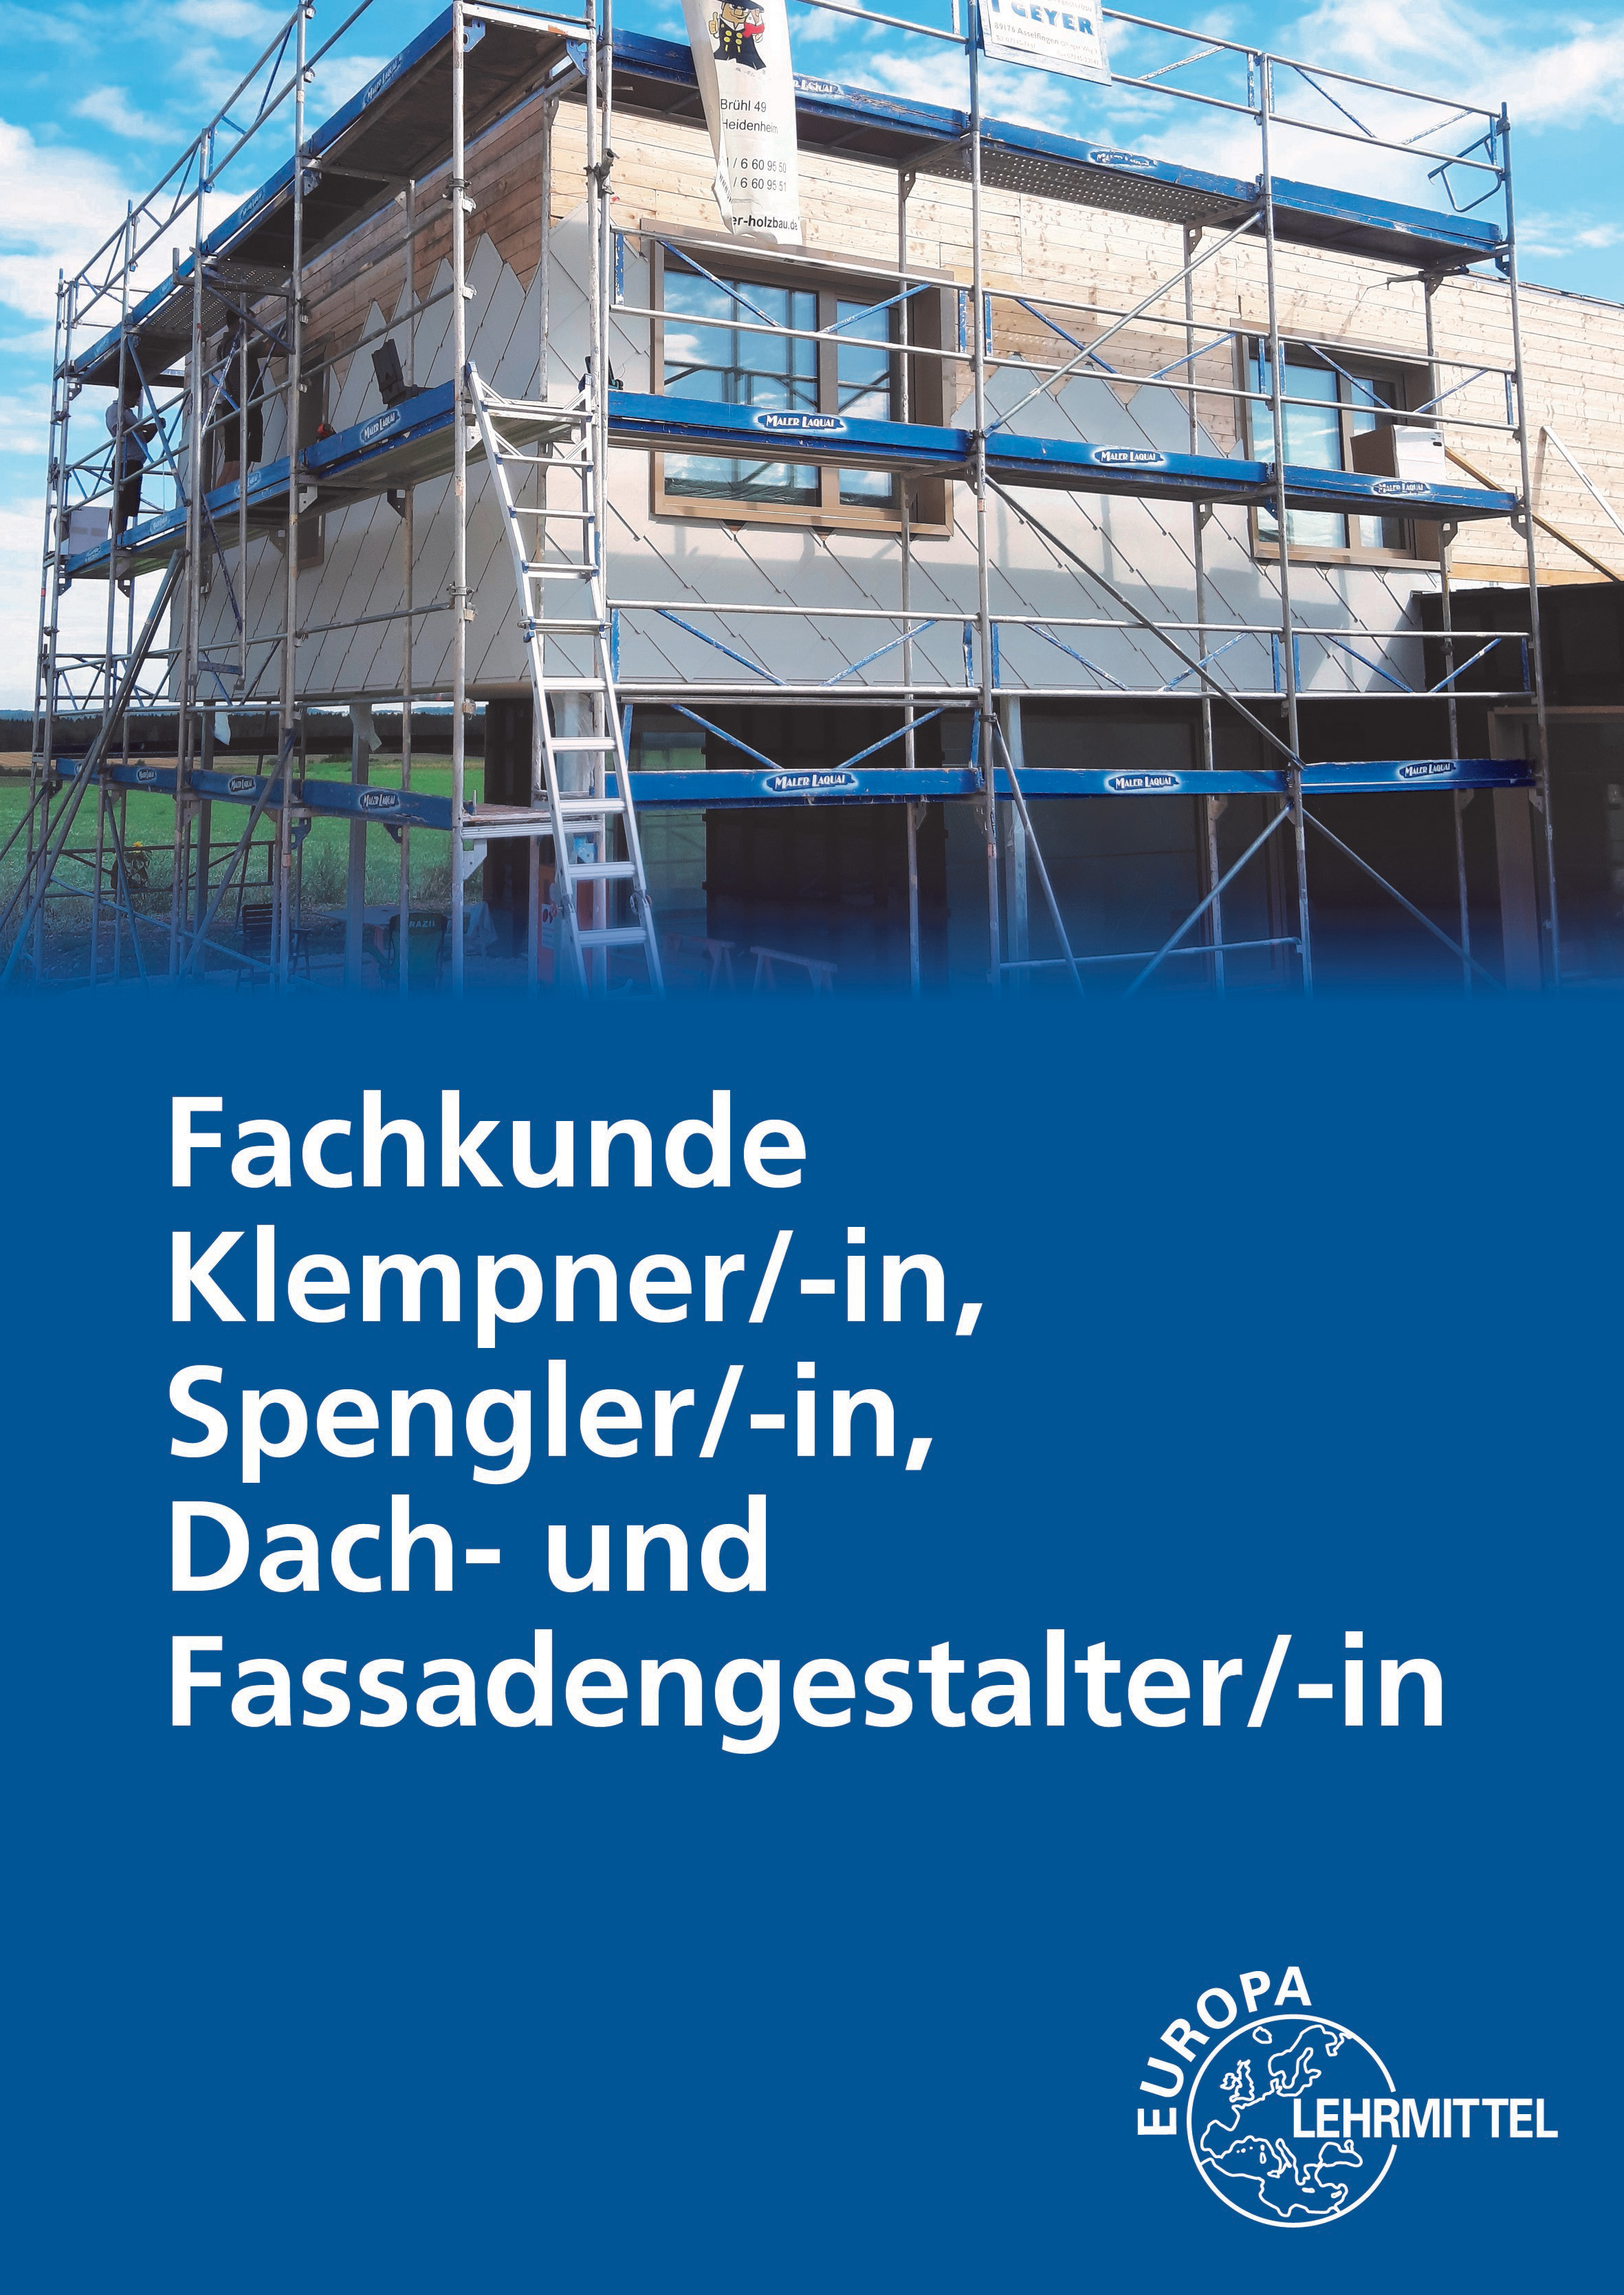 Fachkunde Klempner/-in, Spengler/-in, Dach- und Fassadengestalter/-in